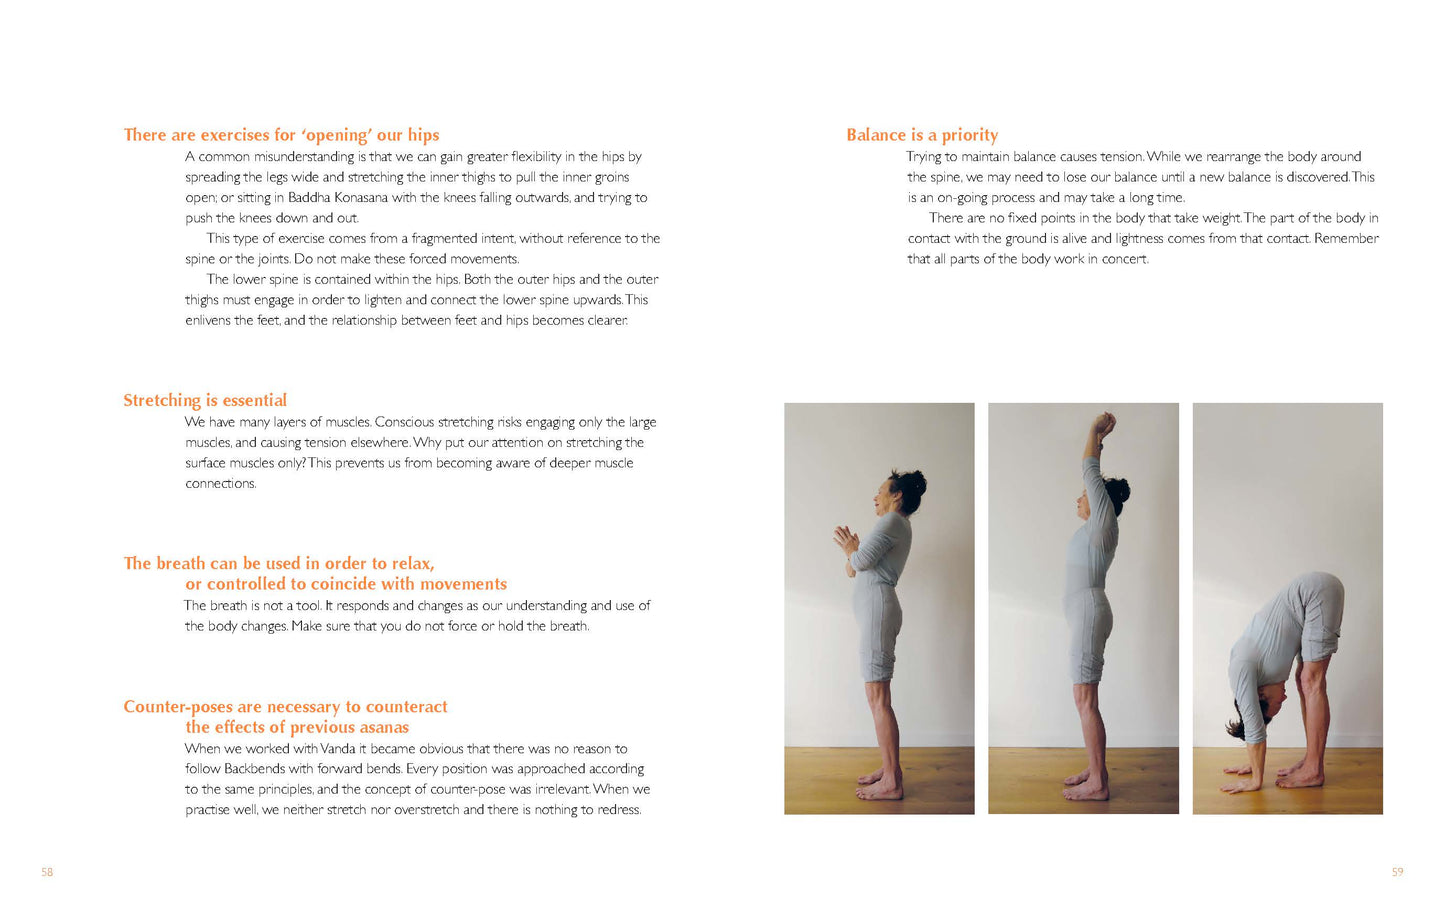 Notes on Yoga: The legacy of Vanda Scaravelli